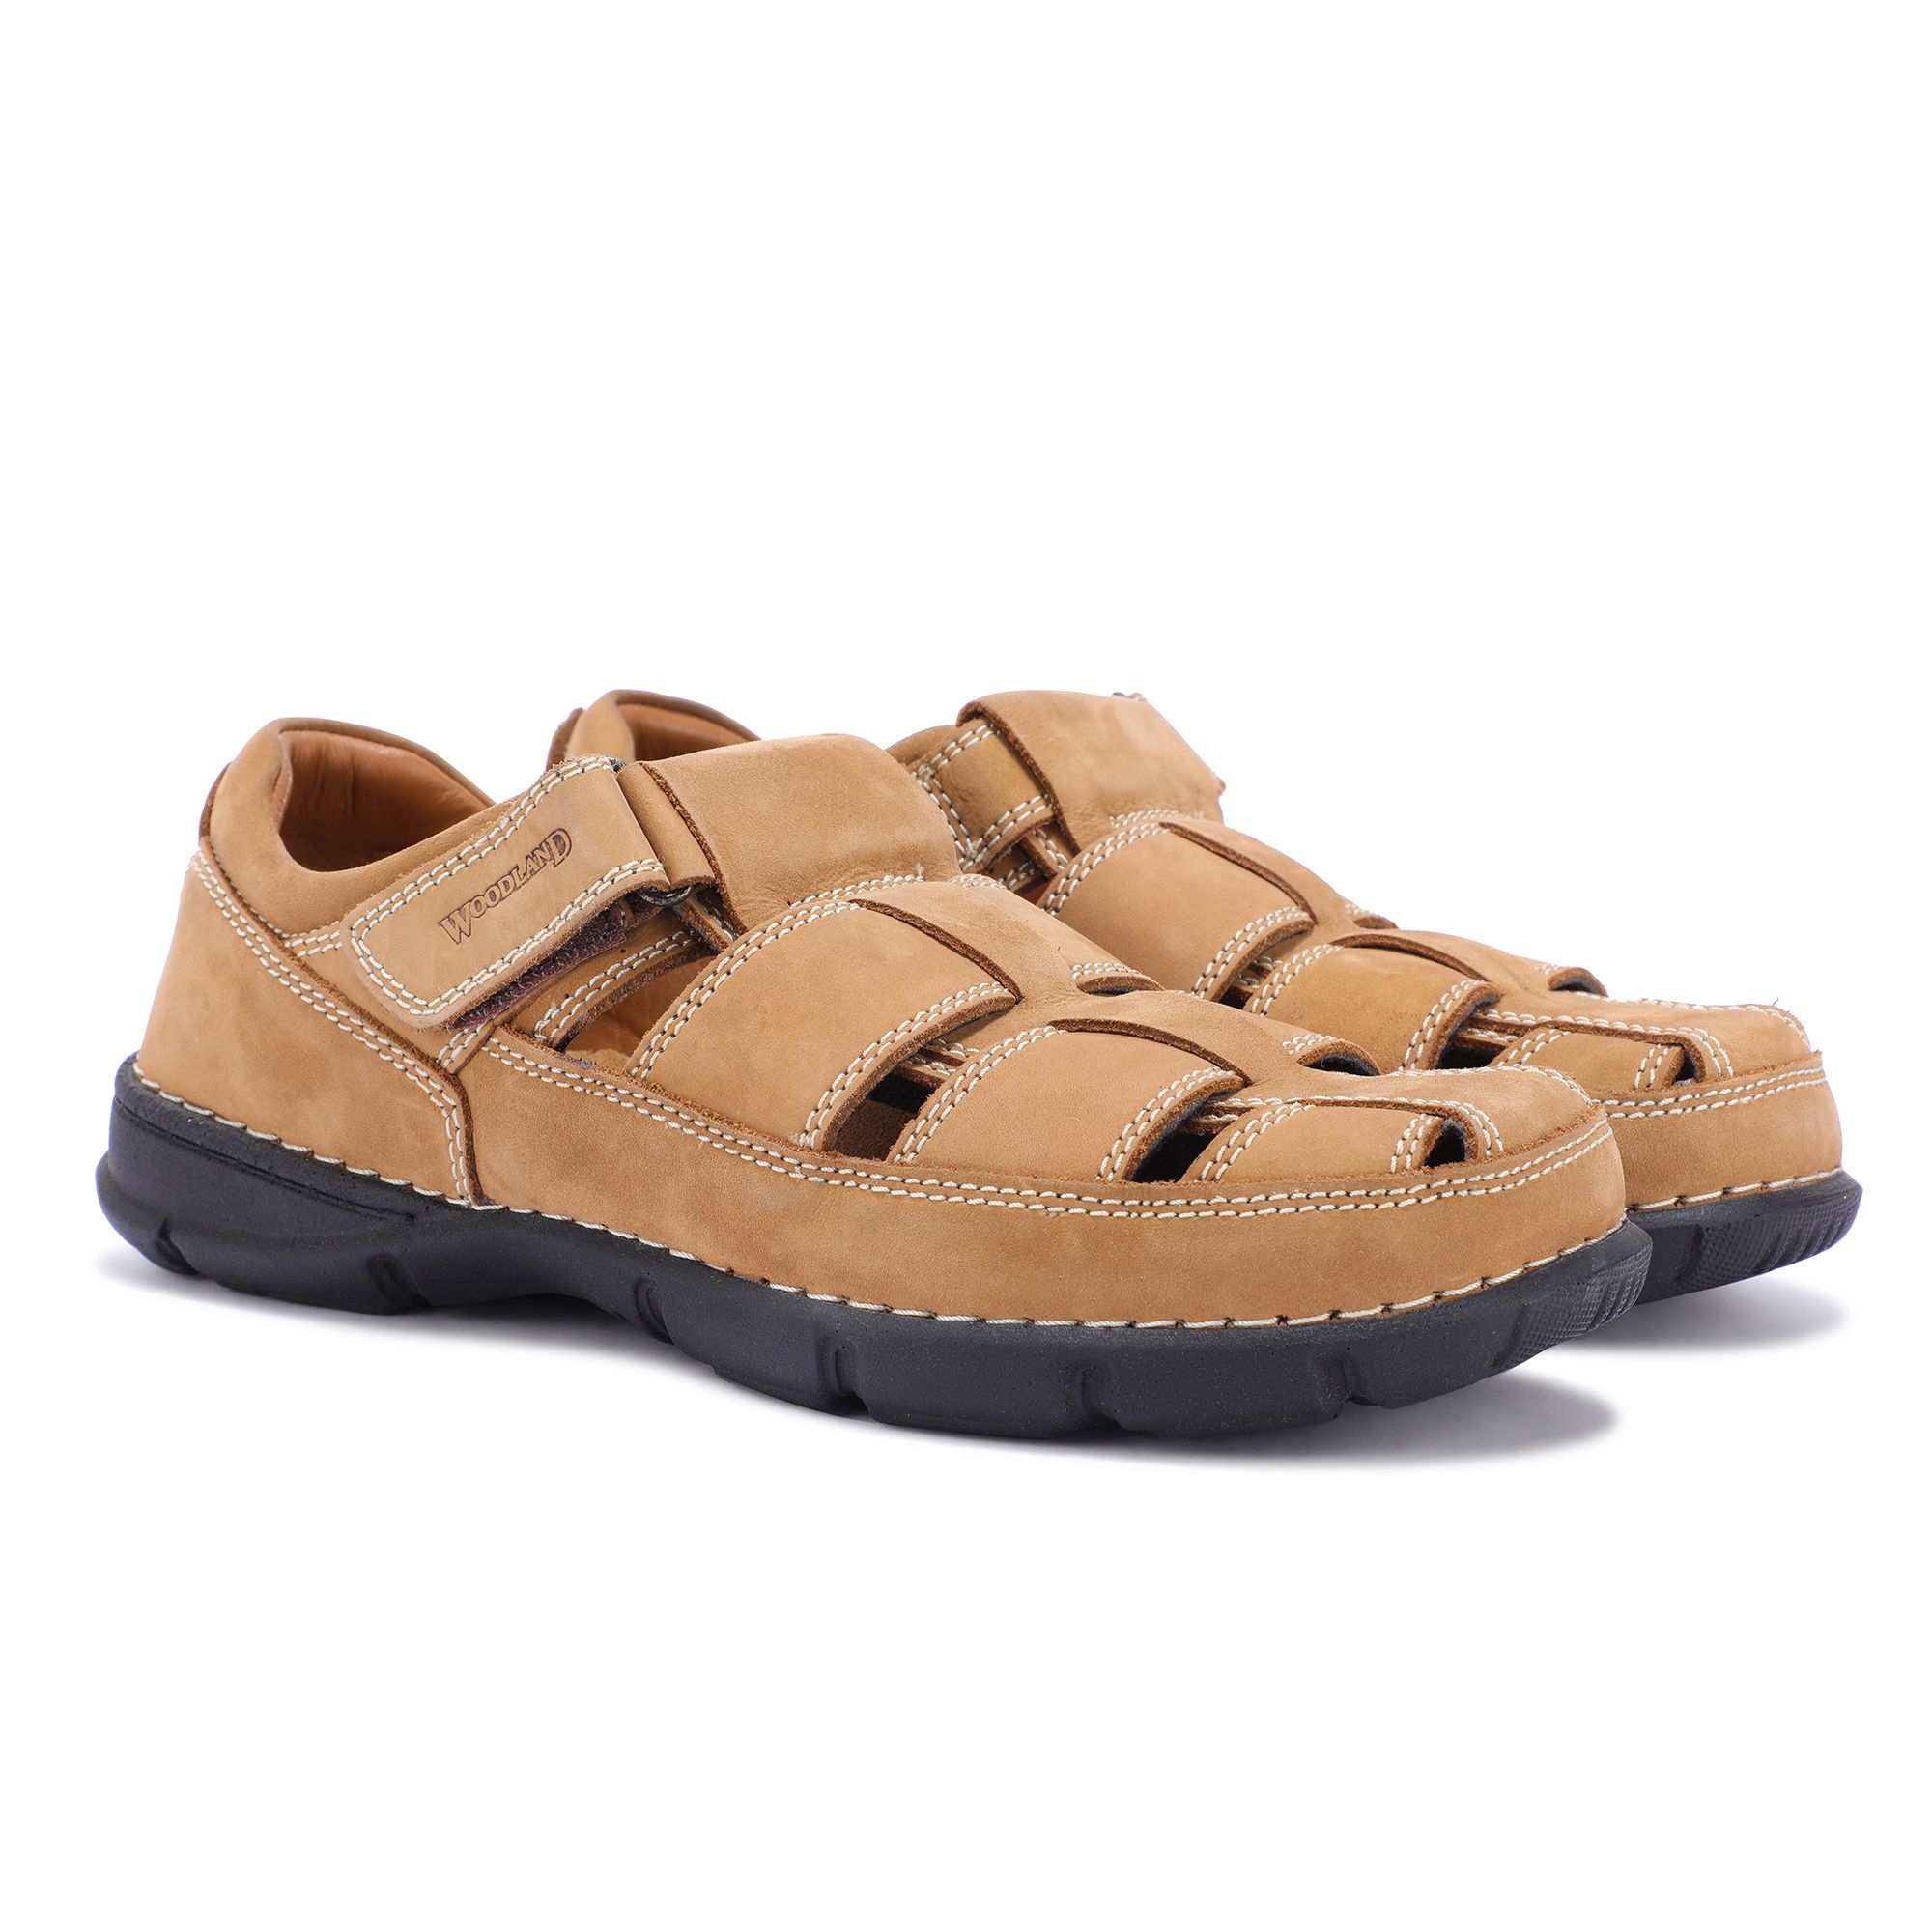 Woodland Leather Sandals For Men - 1033111 Camel-sgquangbinhtourist.com.vn